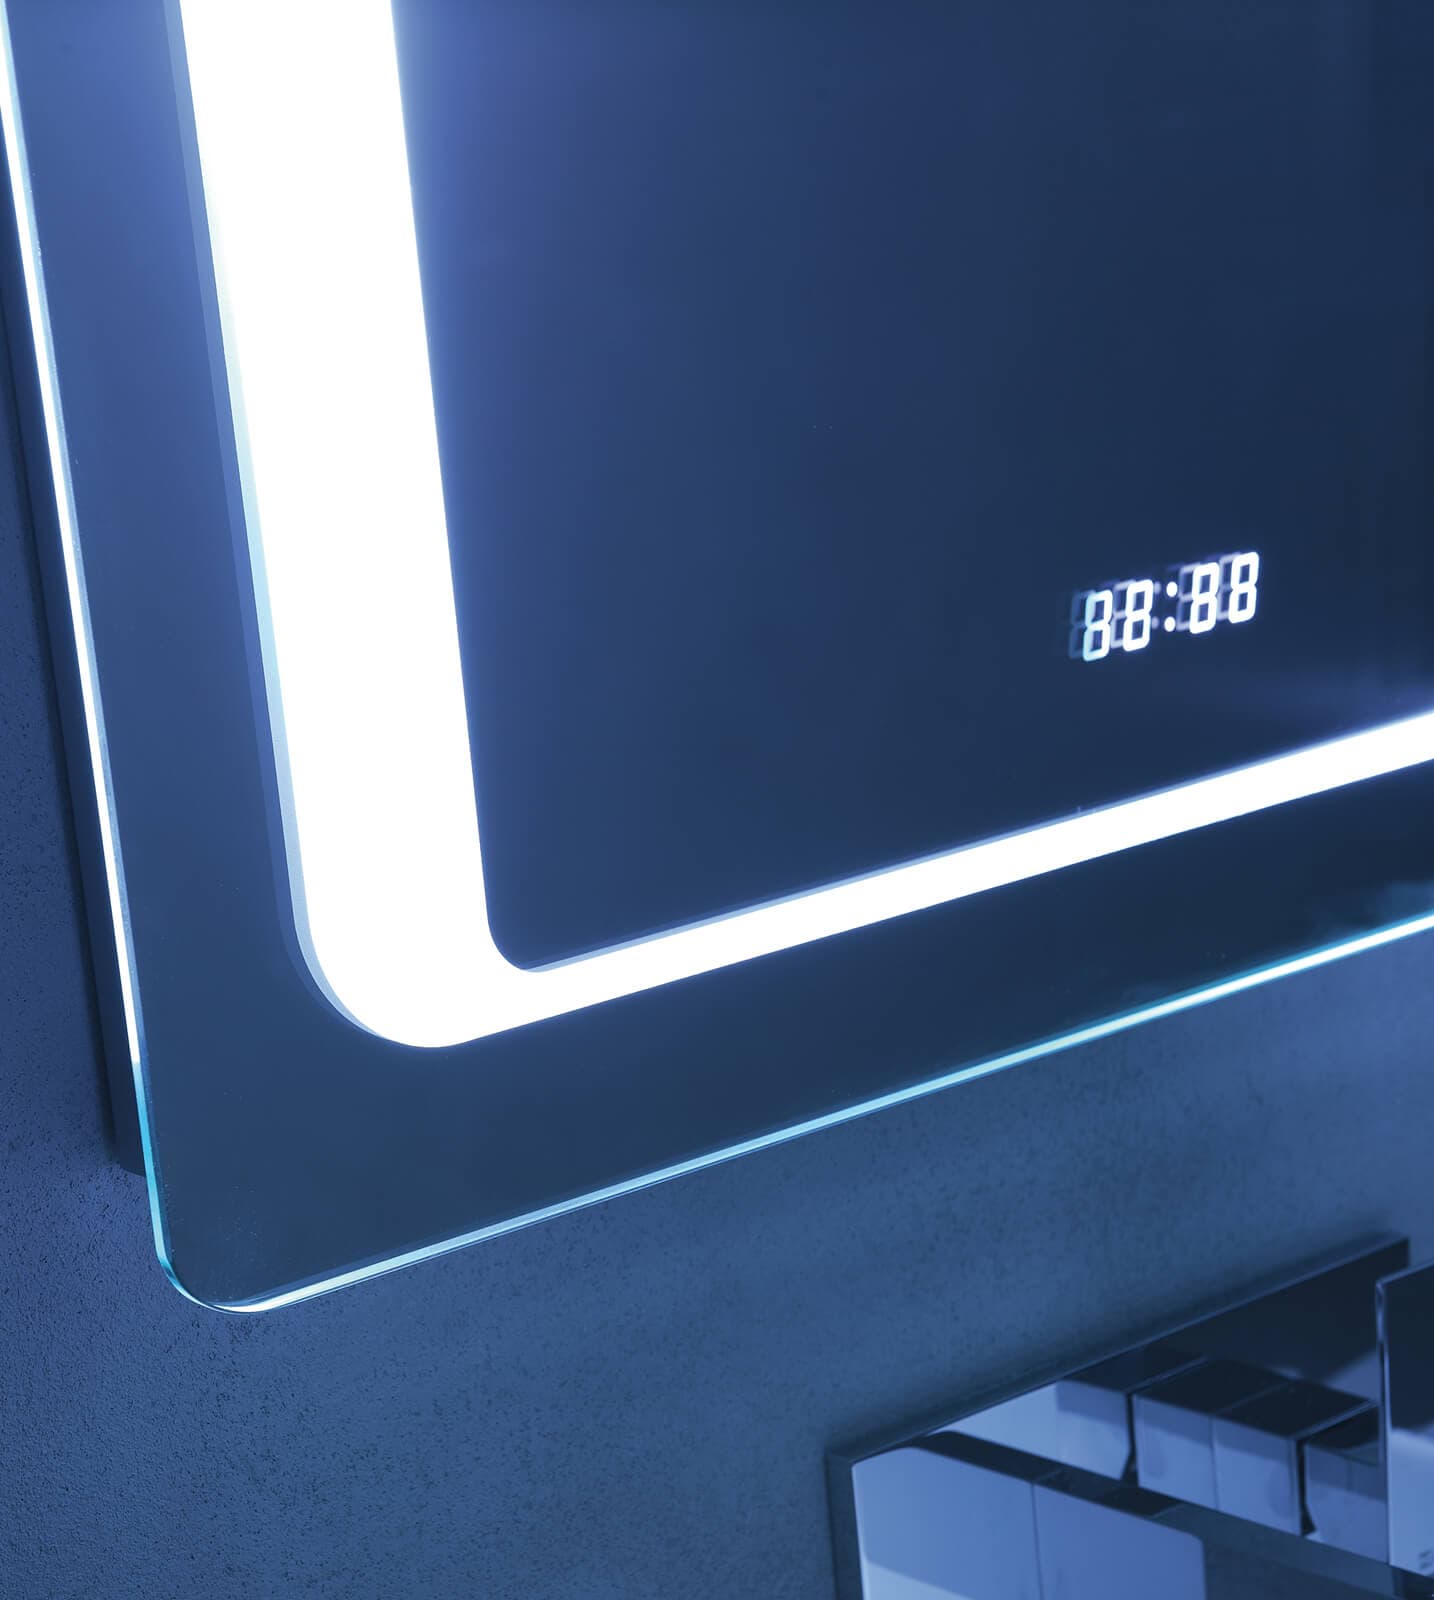 Bathroom Origins Glow 600mm Backlit Led, Illuminated Bathroom Mirror With Digital Clock